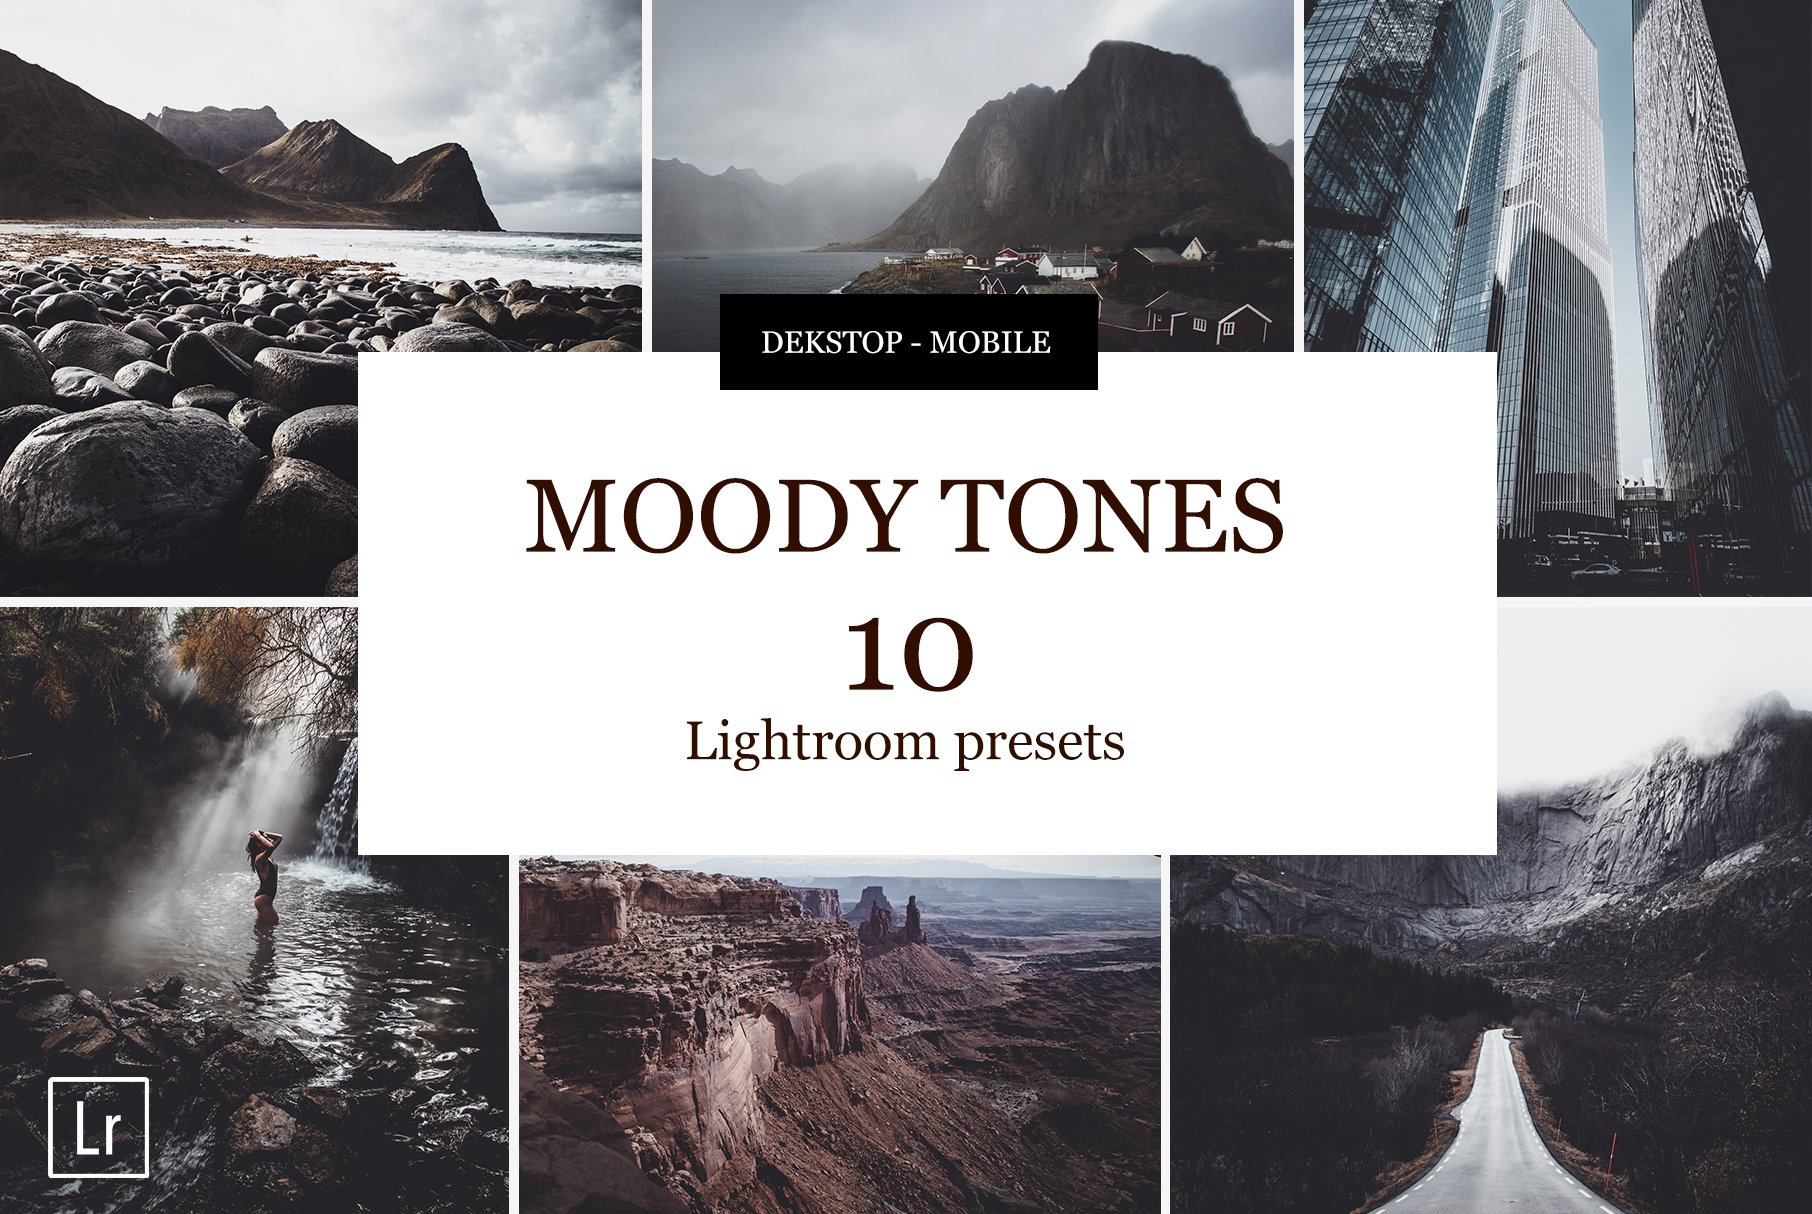 Moody tones Lightroom presets 2022cover image.